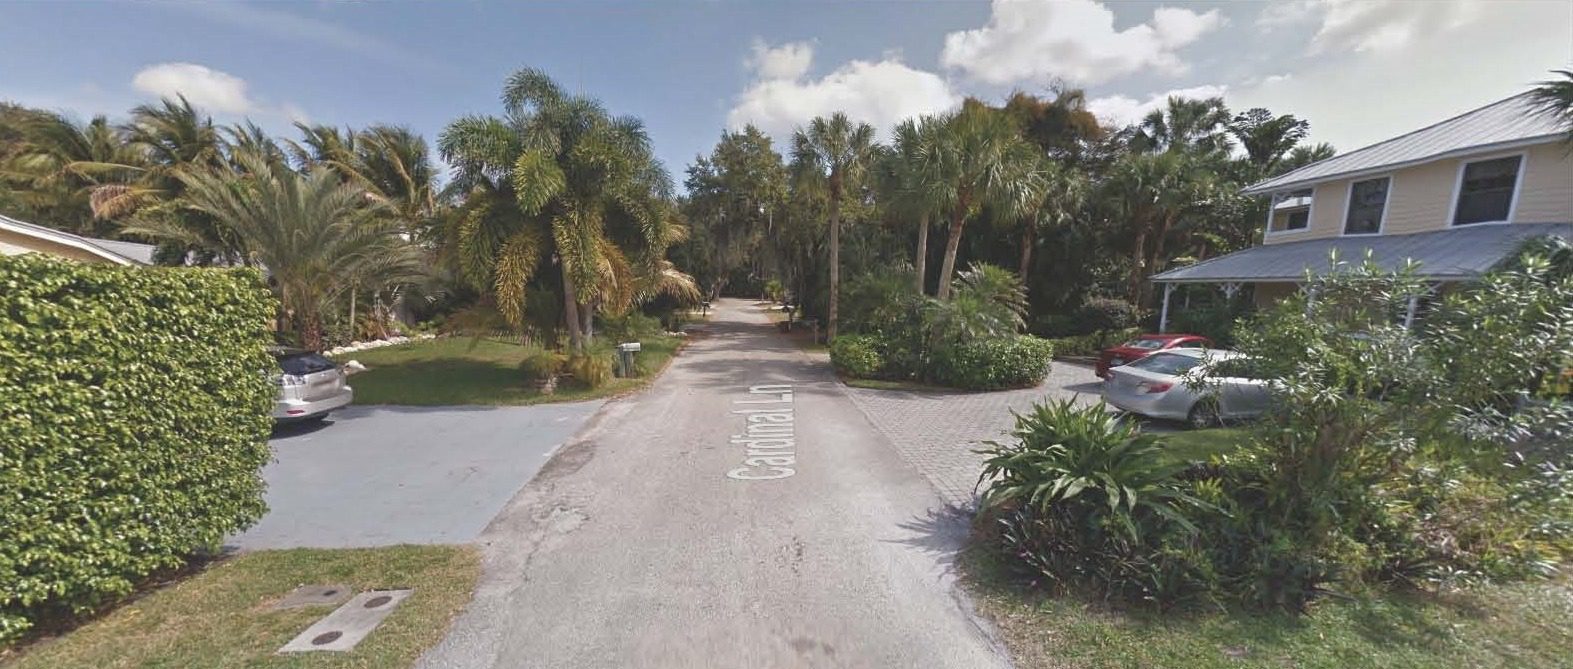 Snook Hole Palm Beach Gardens Homes for Sale